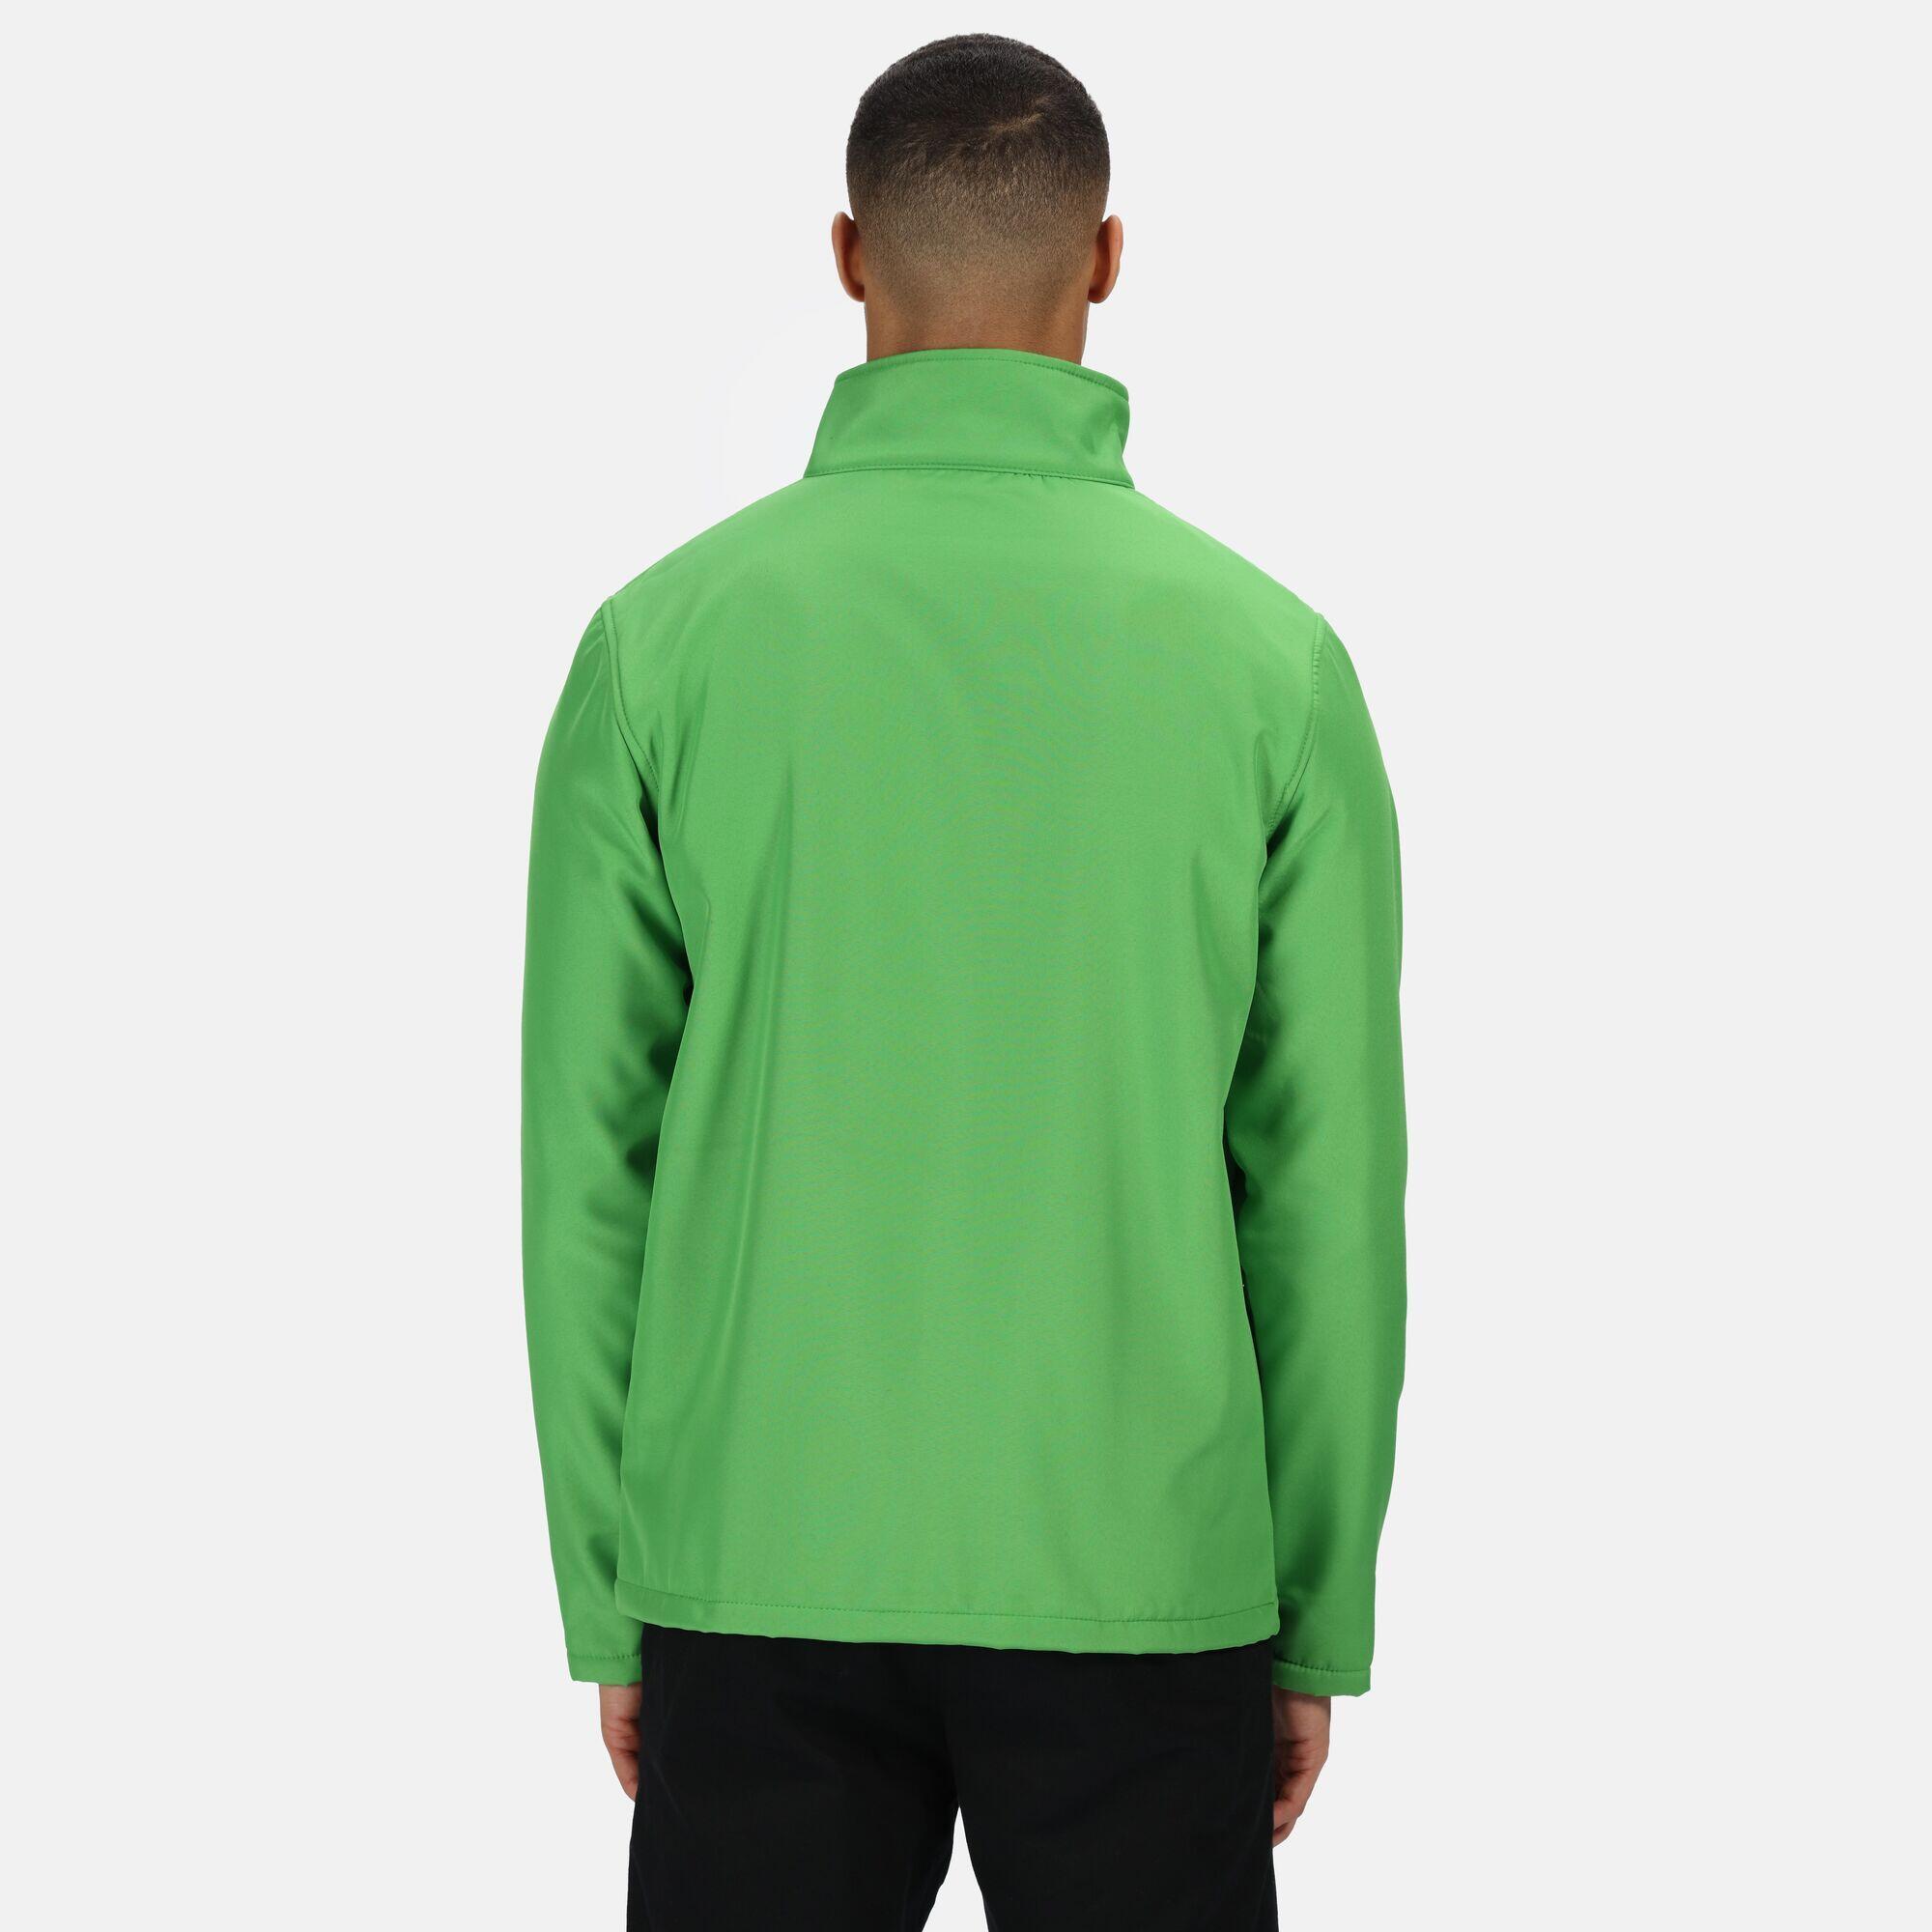 Mens Ablaze Printable Softshell Jacket (Extreme Green/Black) 4/5